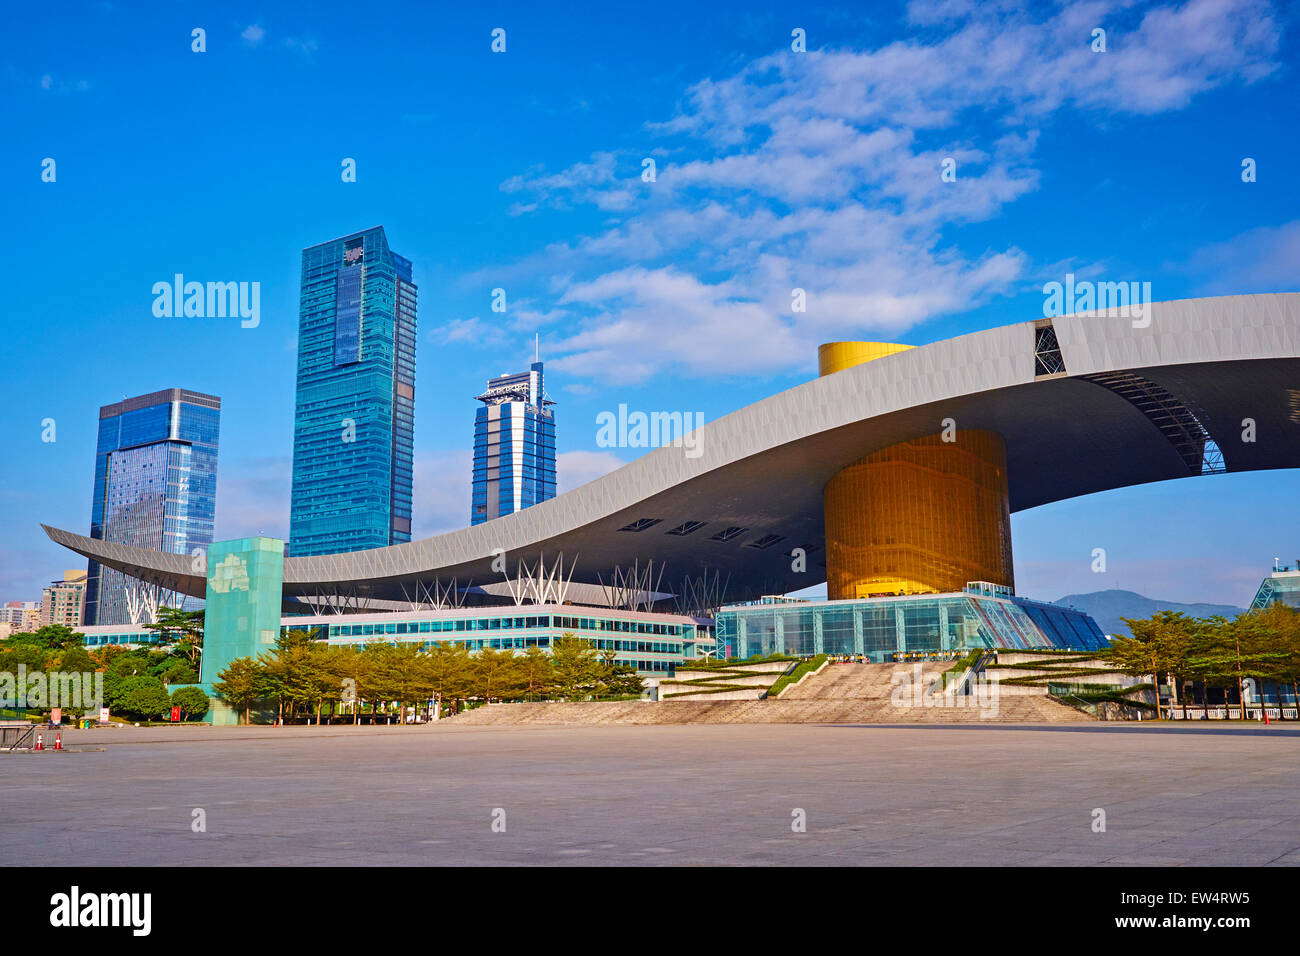 China, en la provincia de Guangdong, Shenzhen, plaza cívica o ciudadanos Square Foto de stock